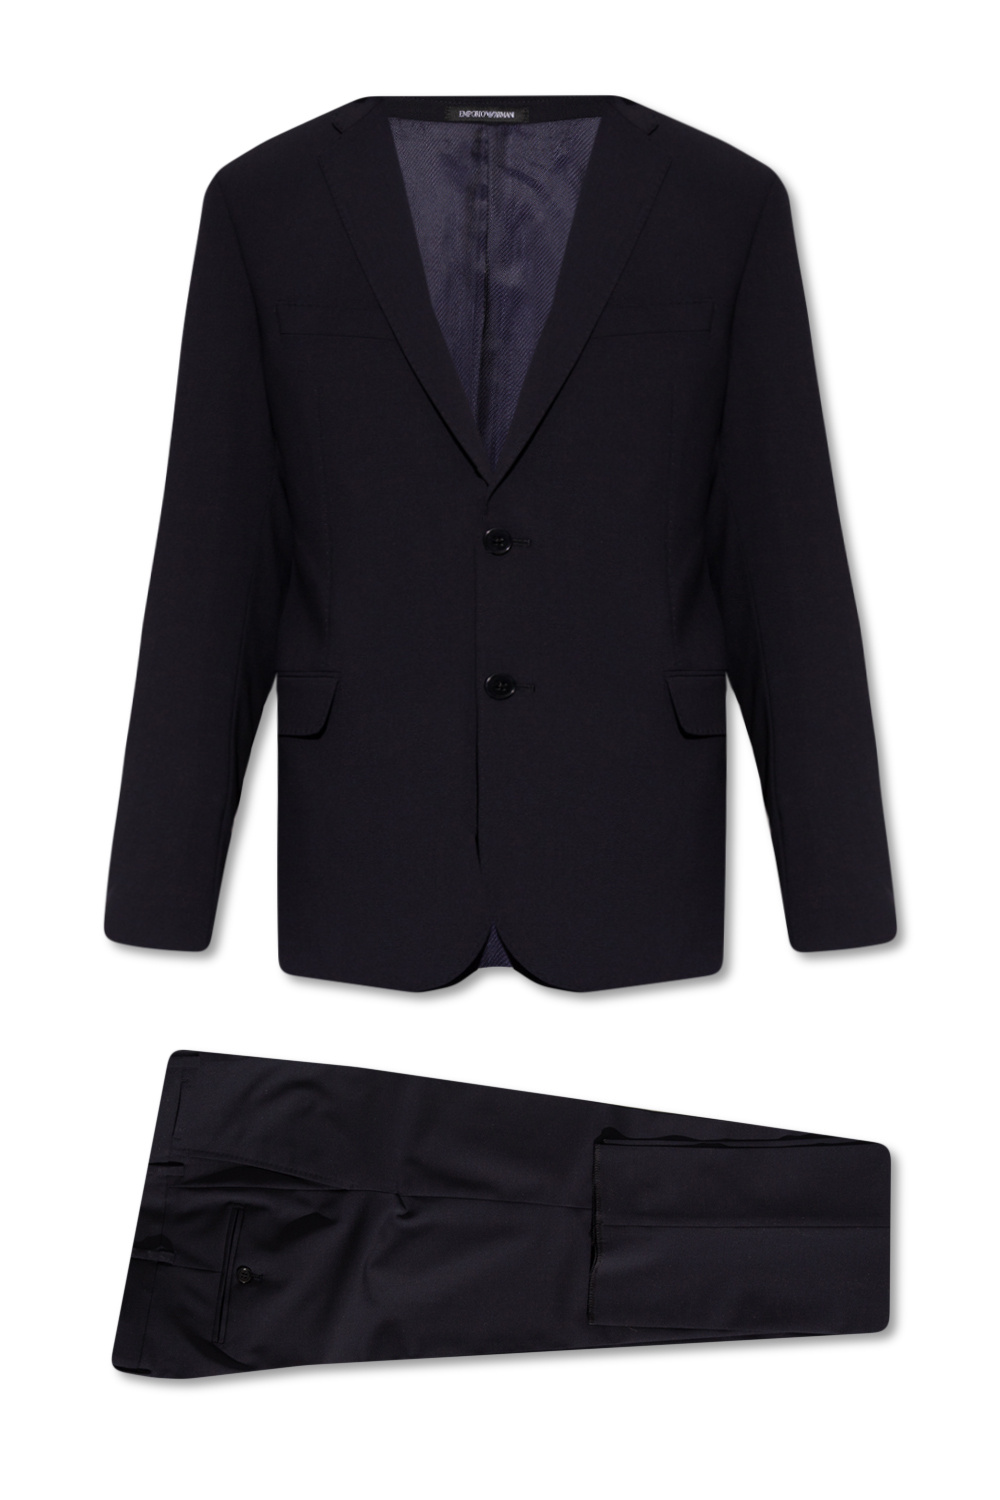 Emporio Armani Suit with pockets | Men's Clothing | Vitkac